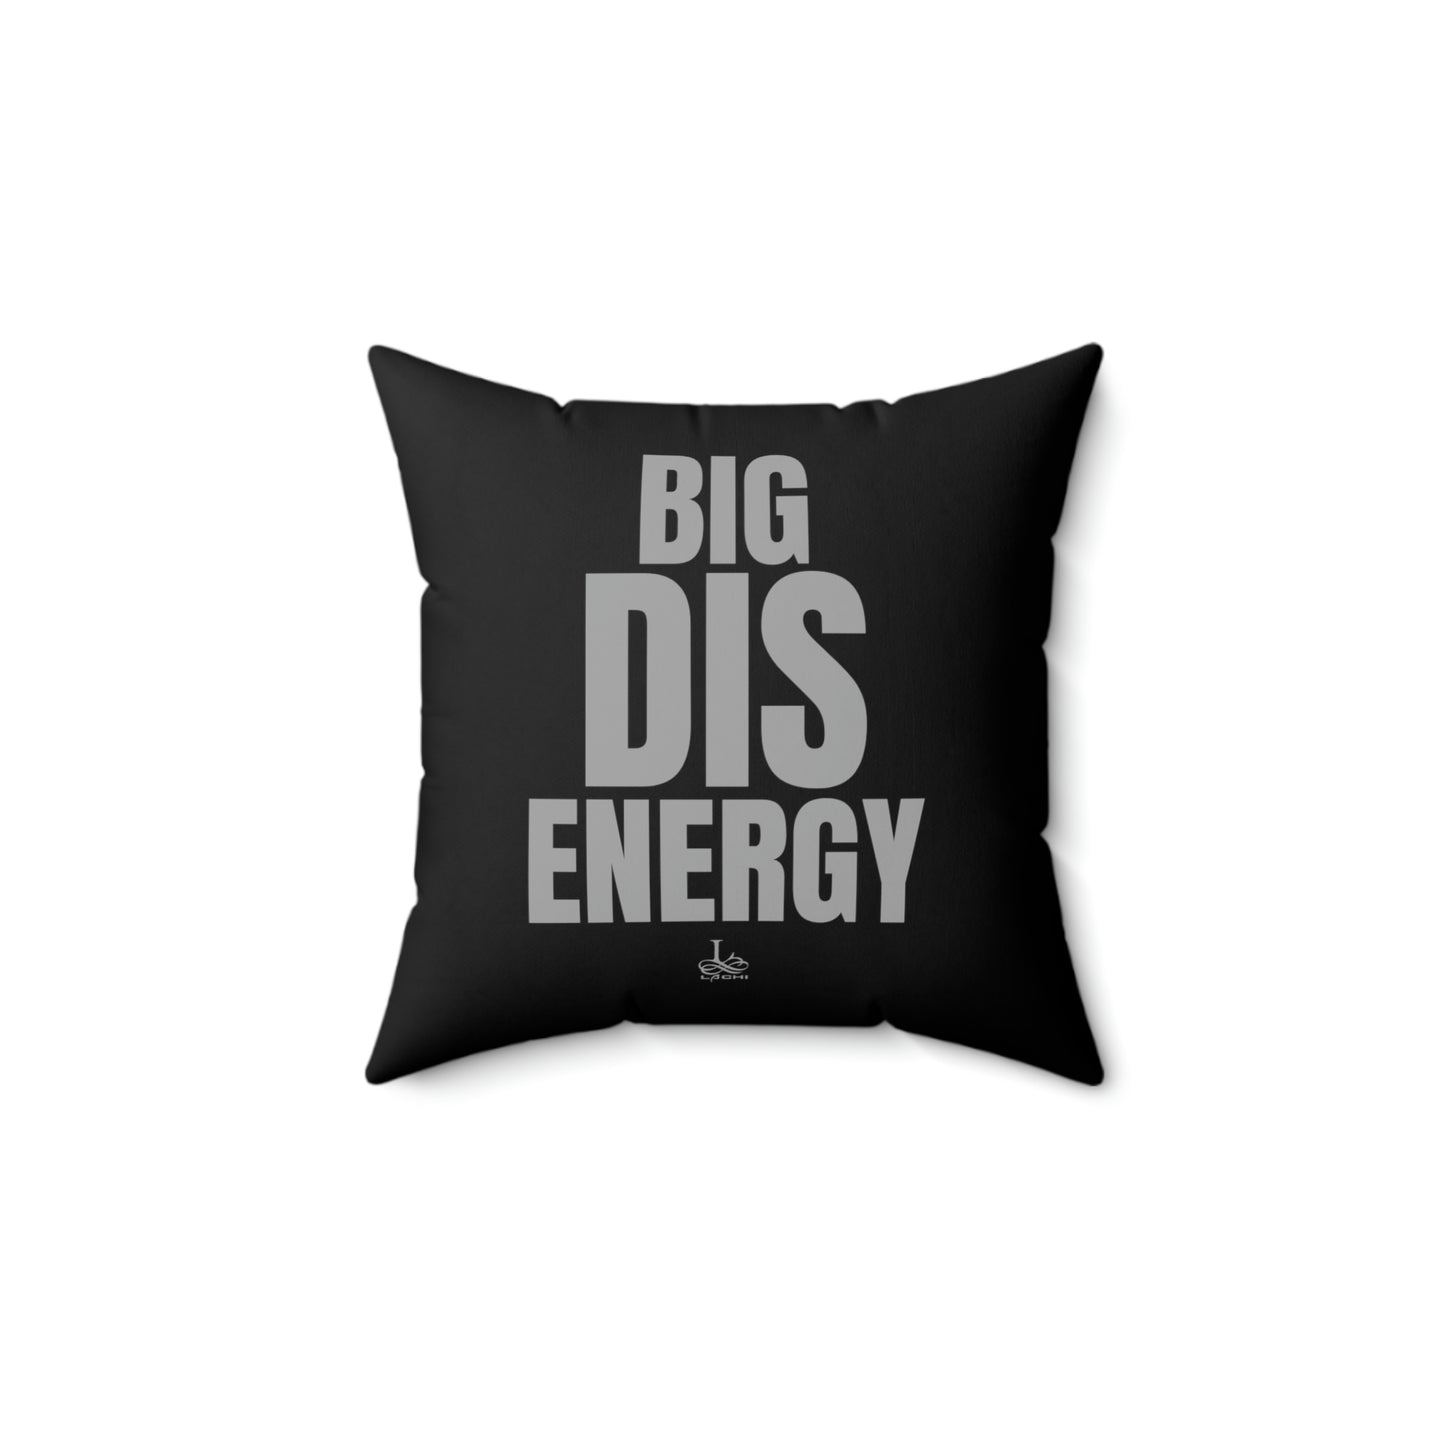 Big DIS Energy - Spun Polyester Square Pillow